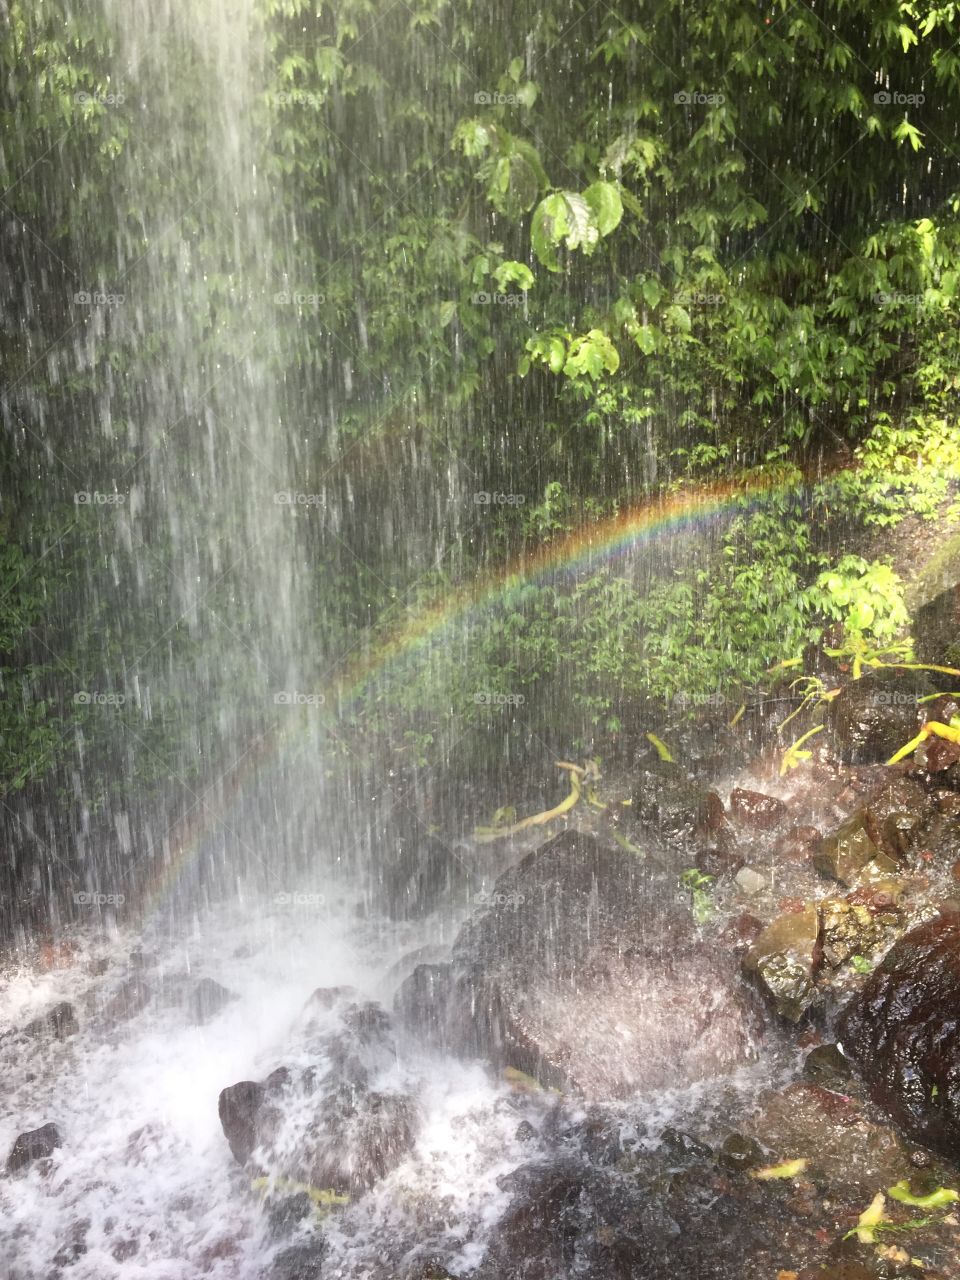 have u ever see rain 🙌🌨🌈🌤
#🌈 #🌧🏹 #raindrops #waterfall #showerofnature ##rainbow #benangkelambu #airterjun #beautifulfall #cooling #refreshing #lombok #mataram @ Benang Stokel And Benang Kelambu Waterfall